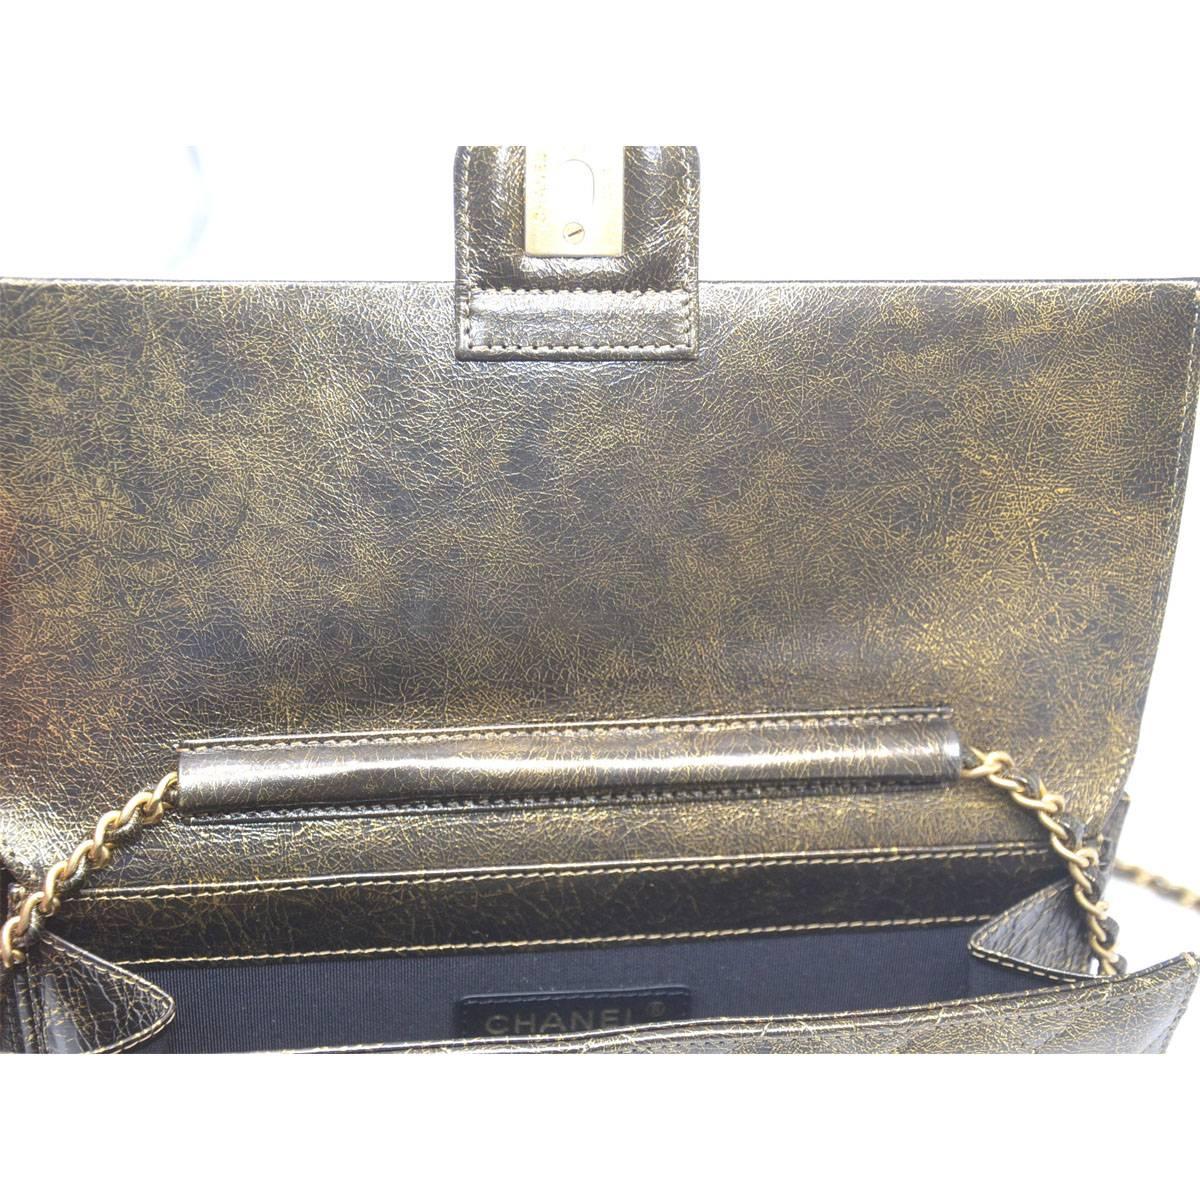 Chanel Single Flap Gold Leather Small Handbag 2